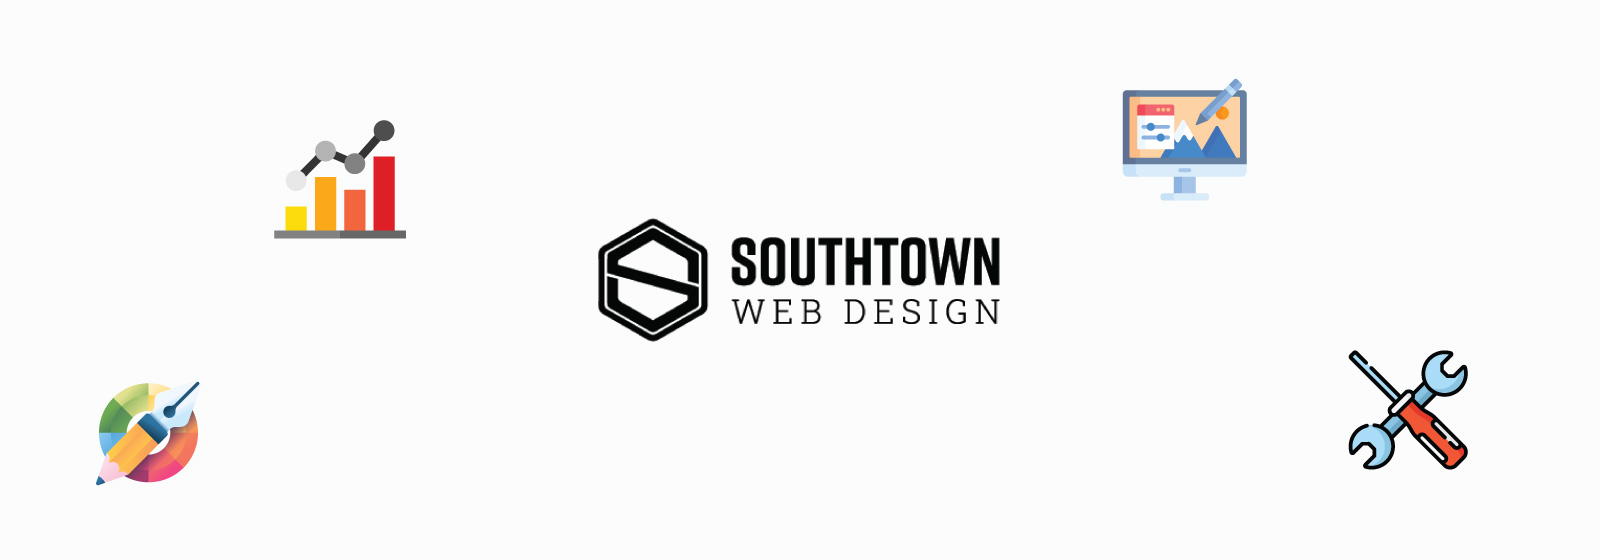 southtown web design consultant